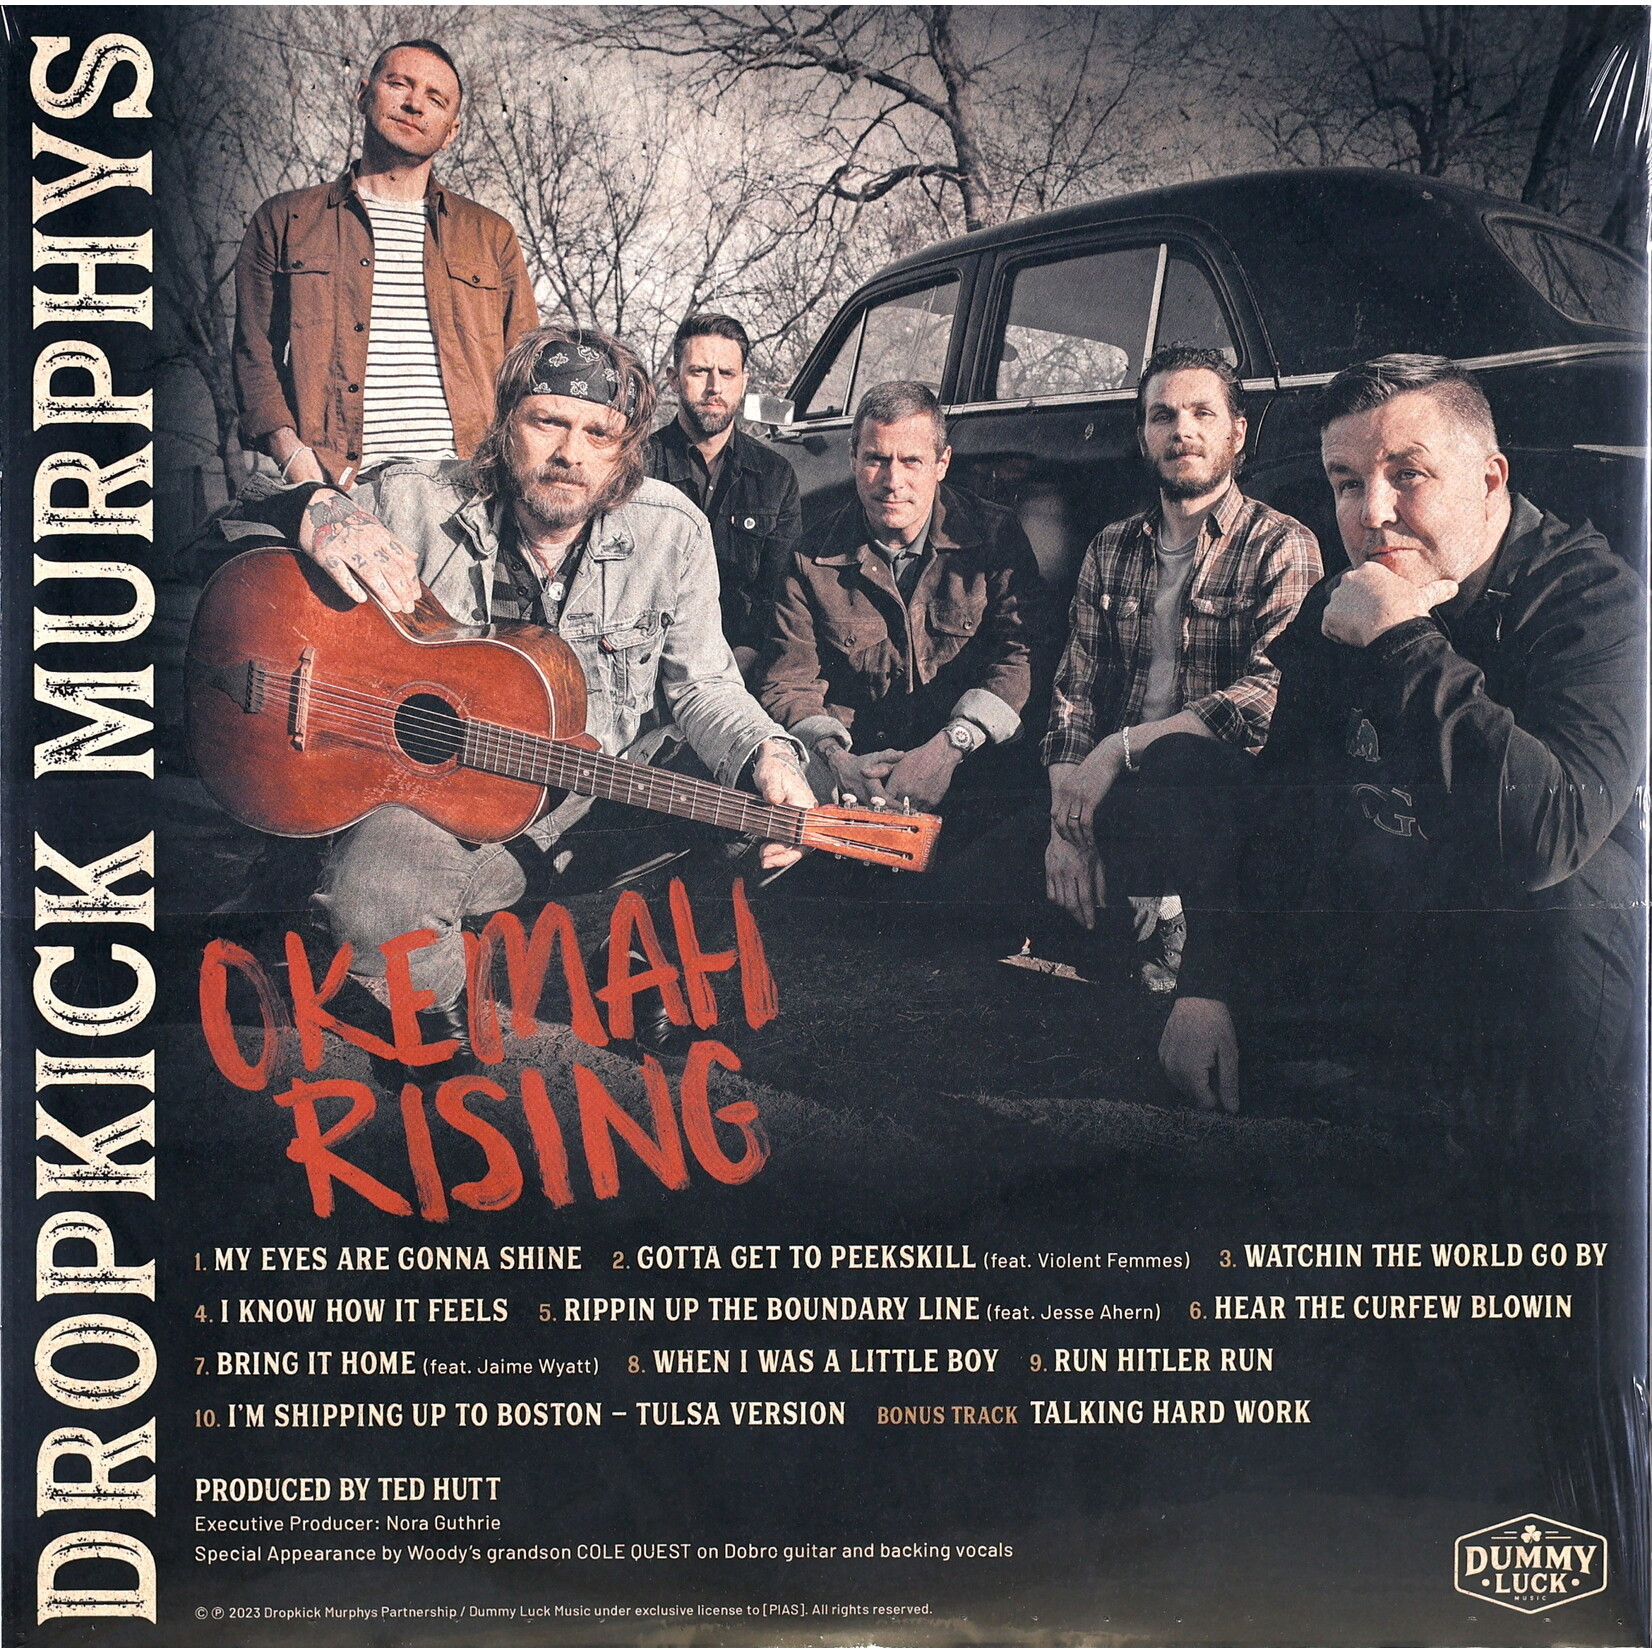 DROPKICK MURPHYS - OKEMAH RISING - GATEFOLD LP